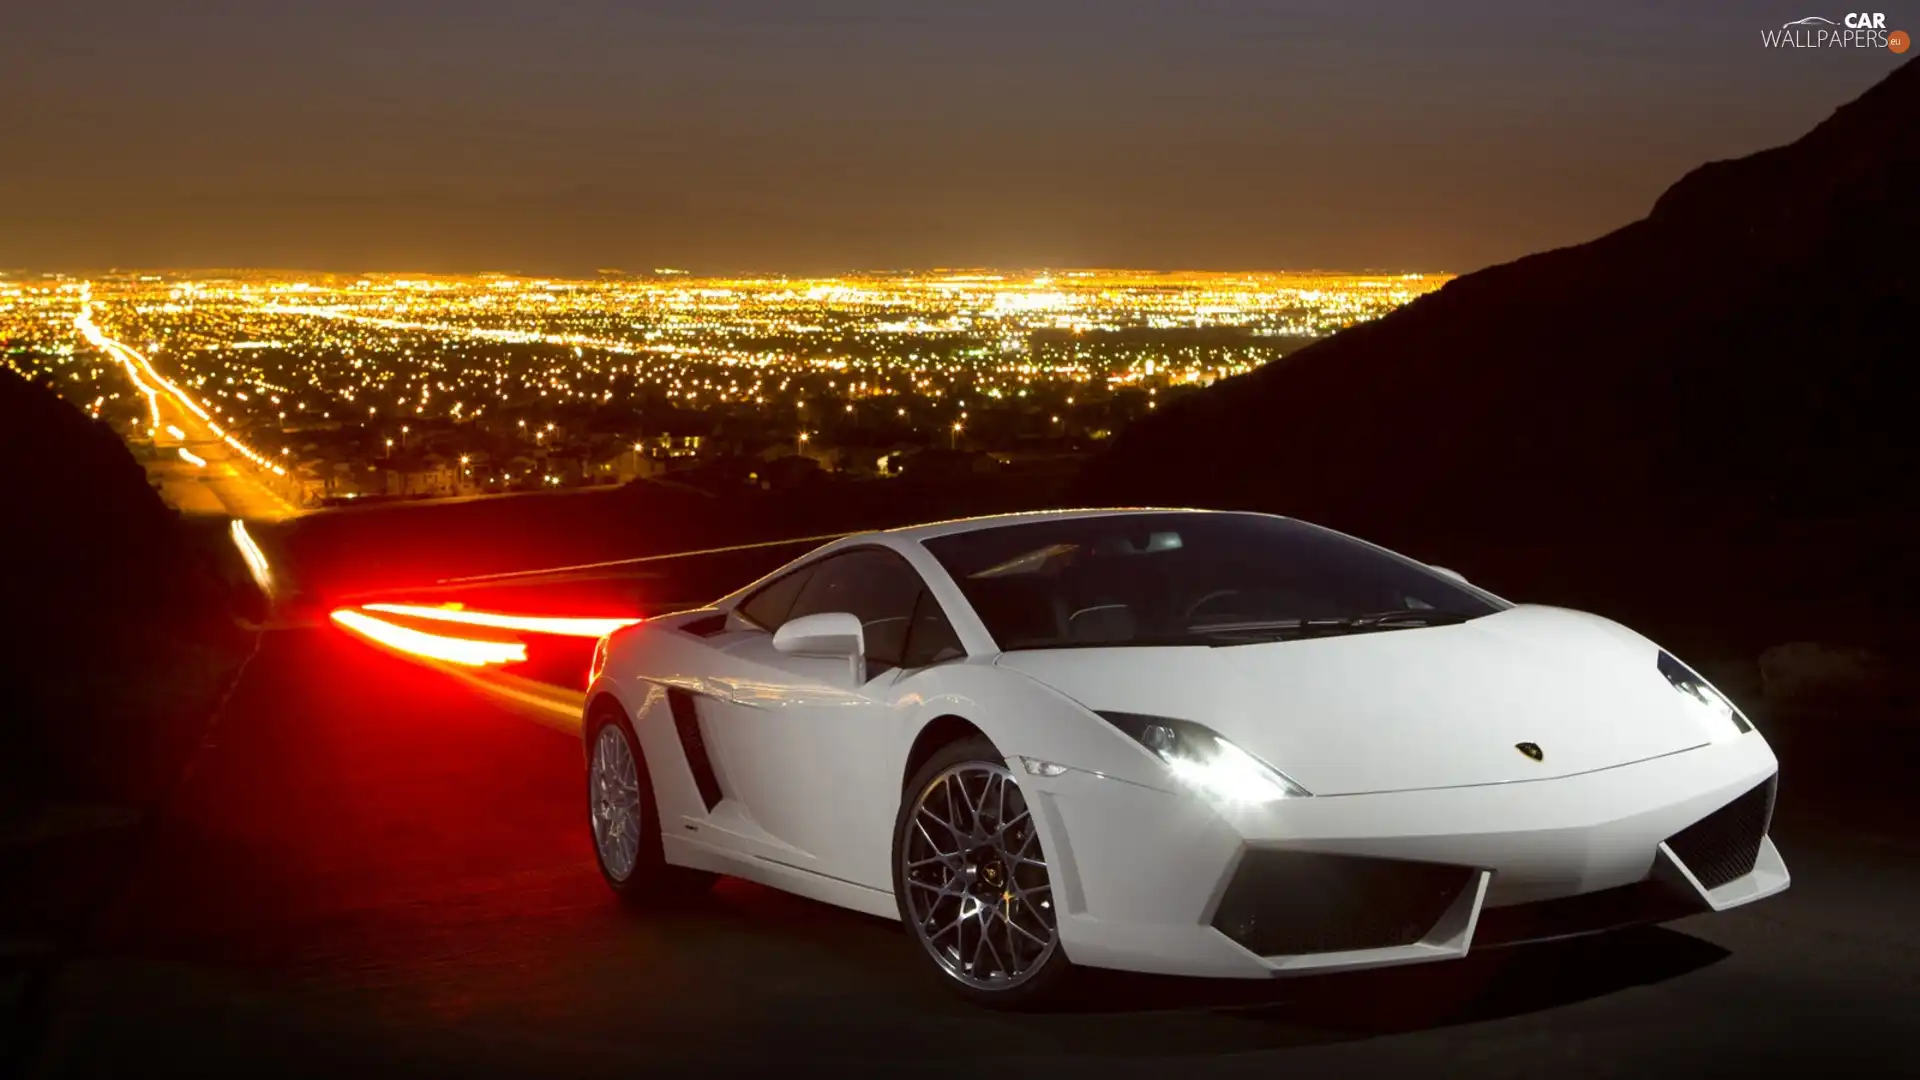 White, LP560, Way, Lamborghini Gallardo